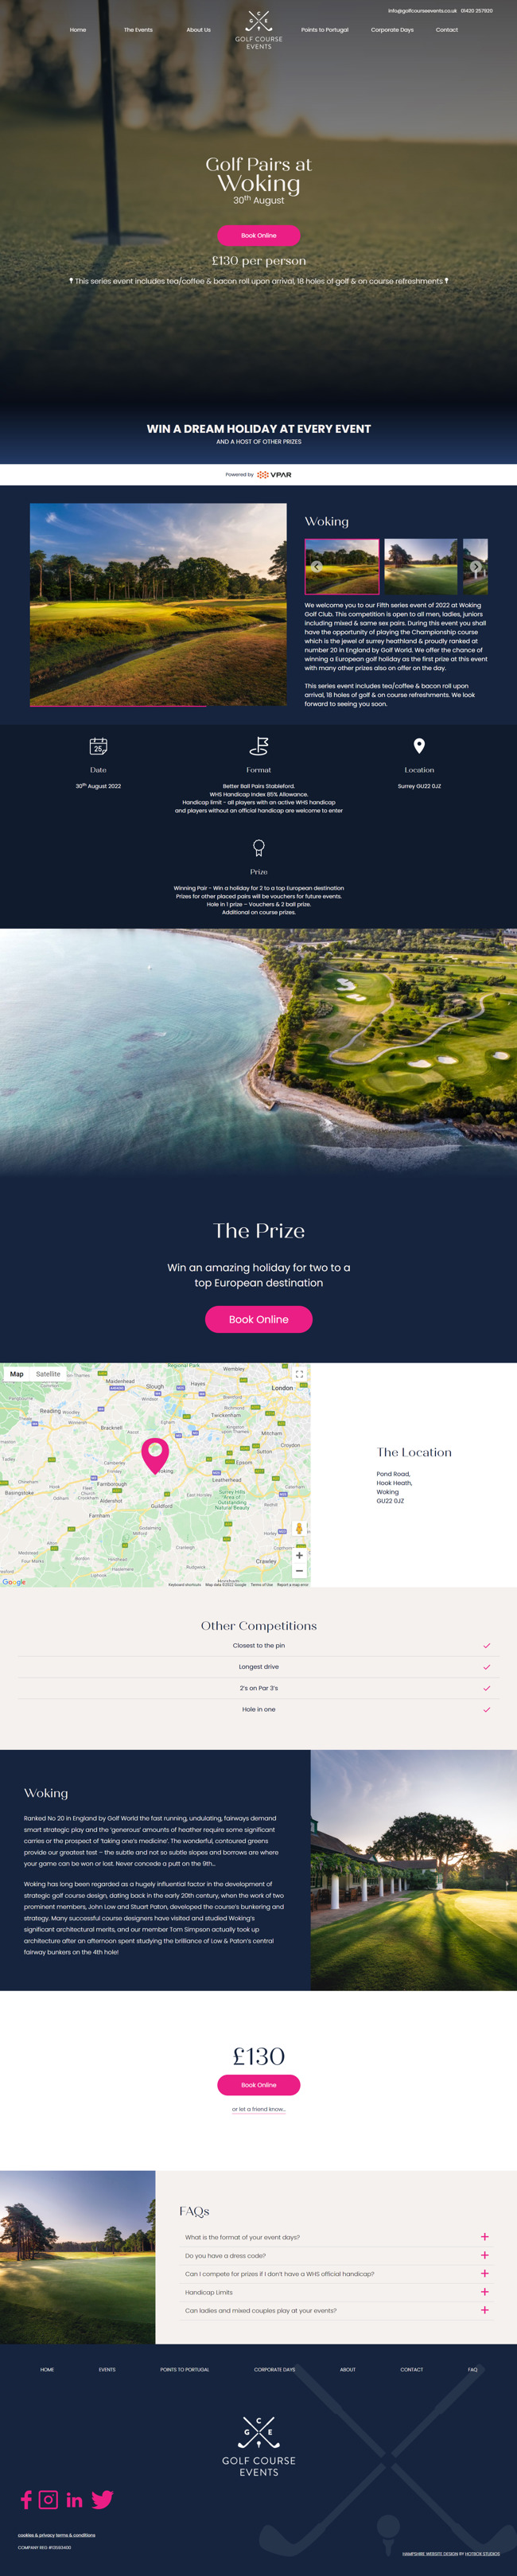 Golf Course Events Website Design And Wordpress Web Development SP007 Woking